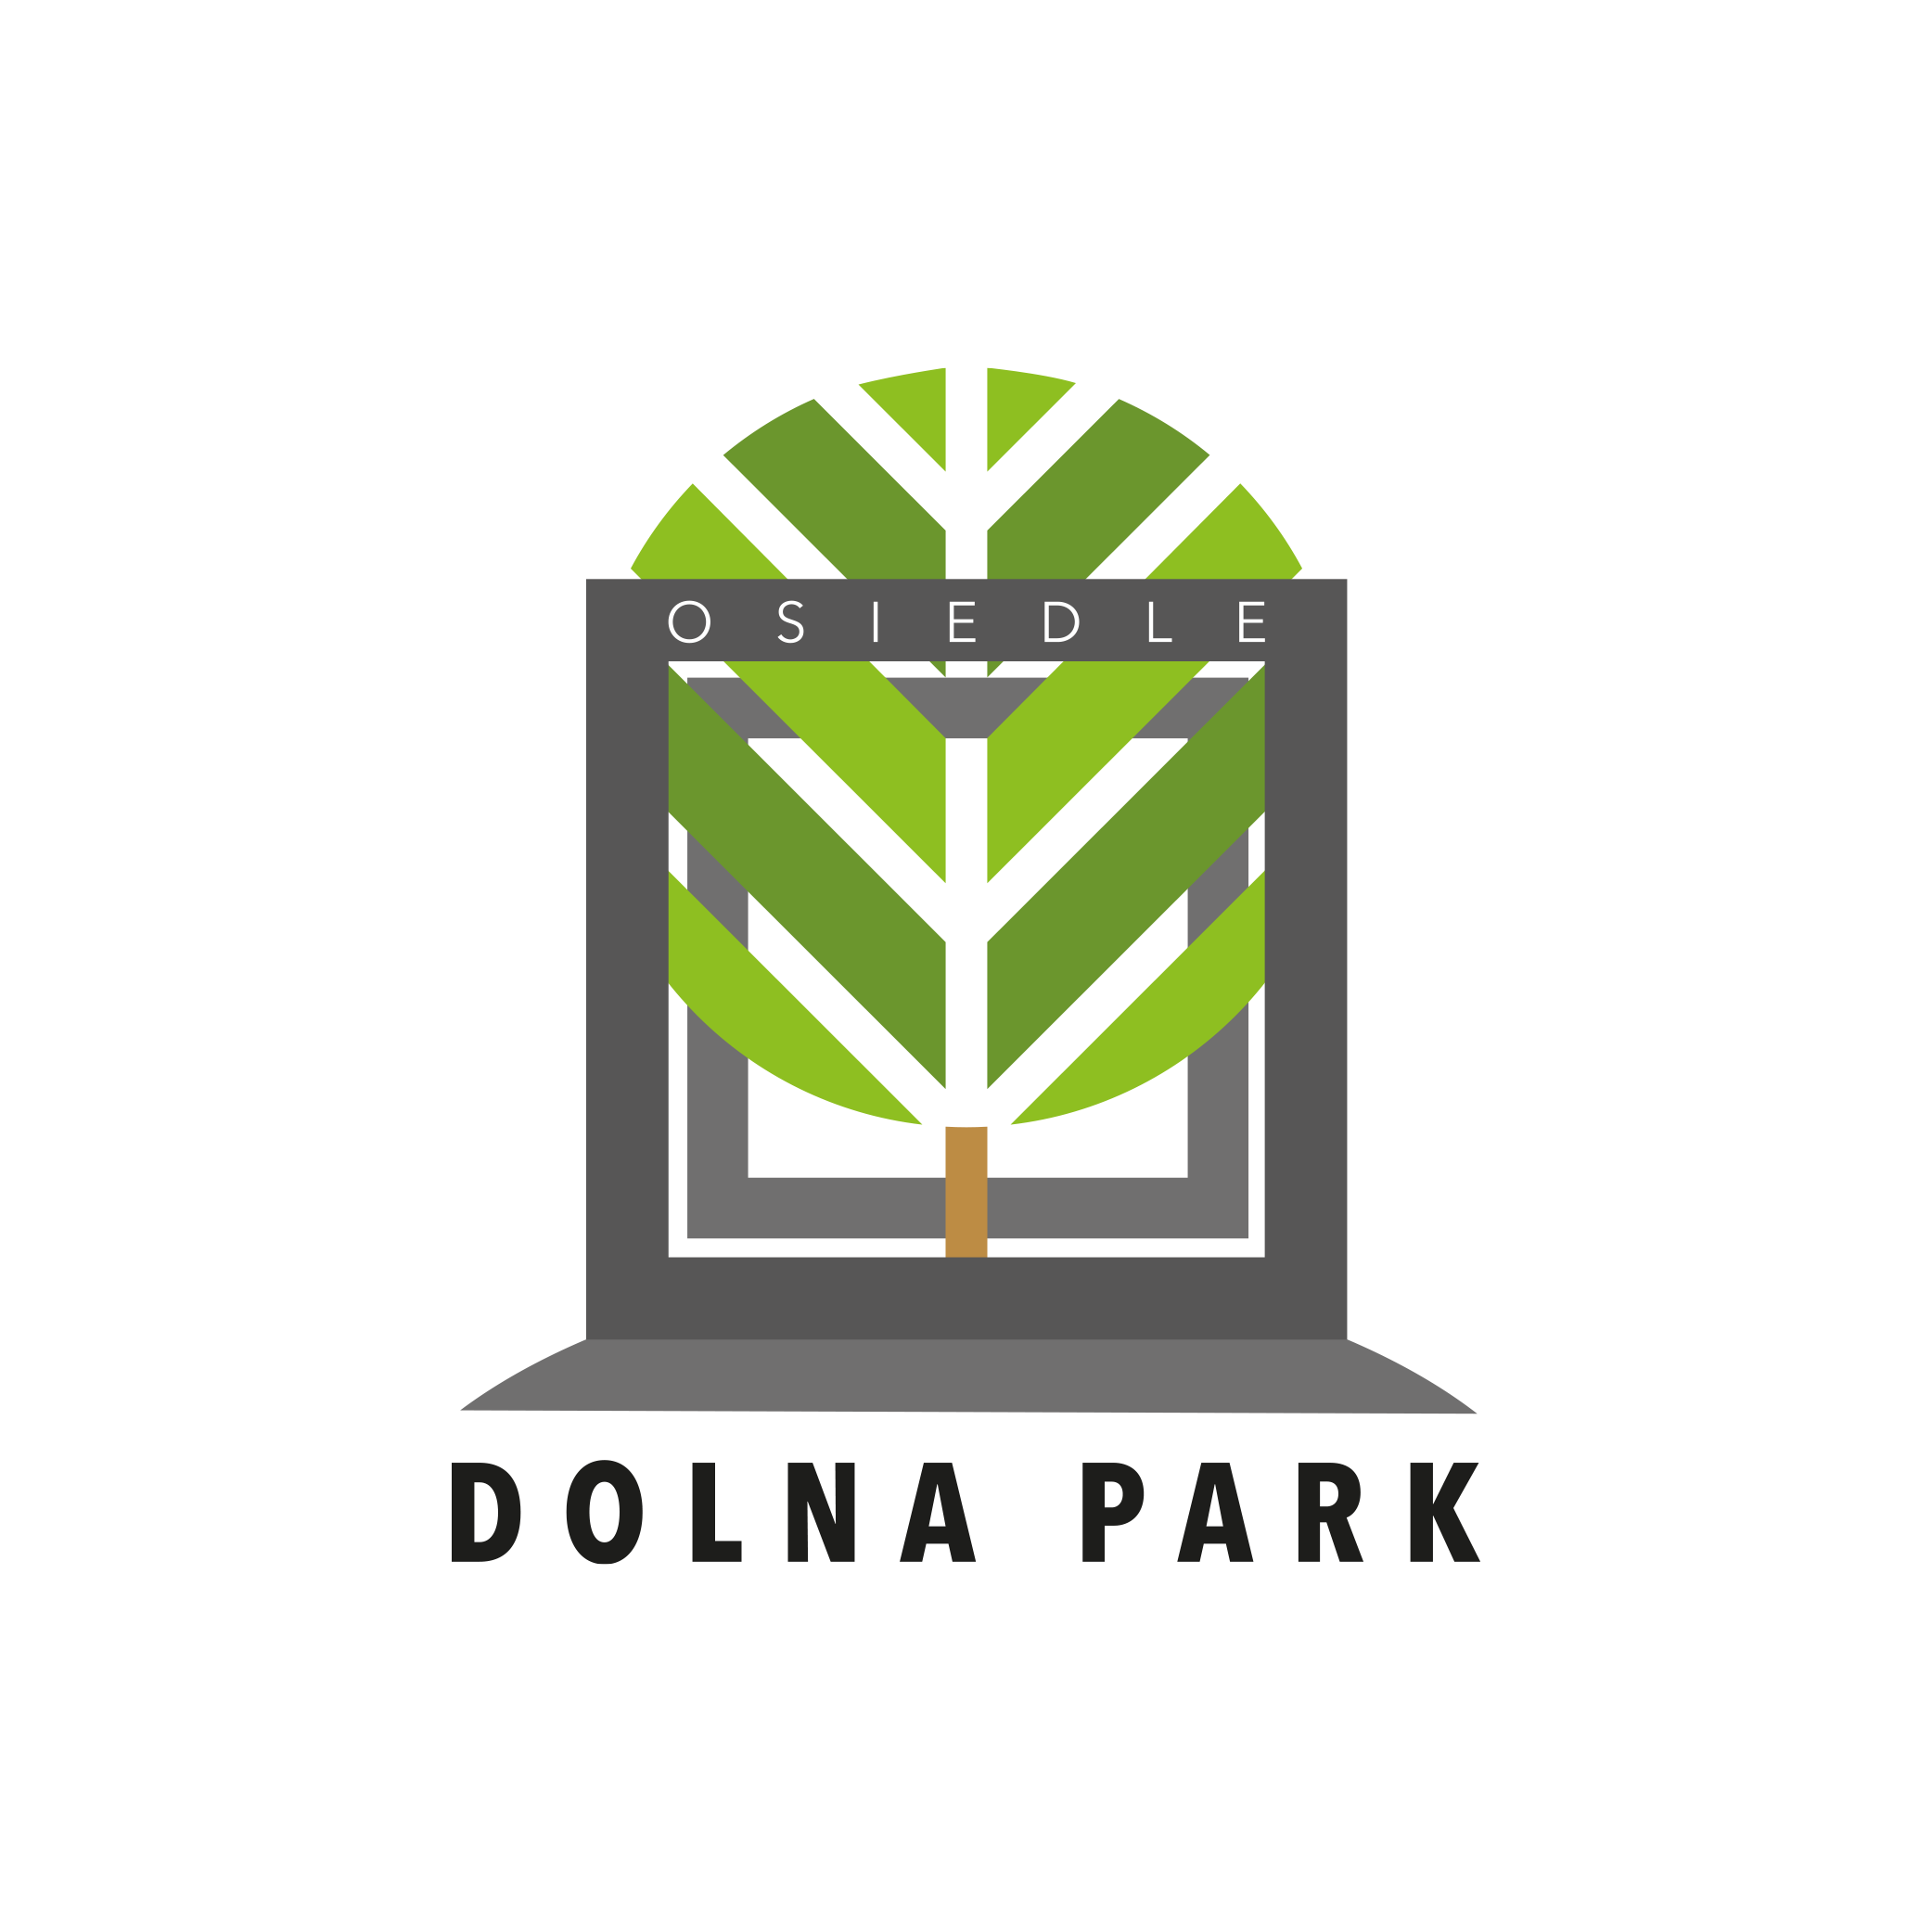 Osiedle Dolna Park